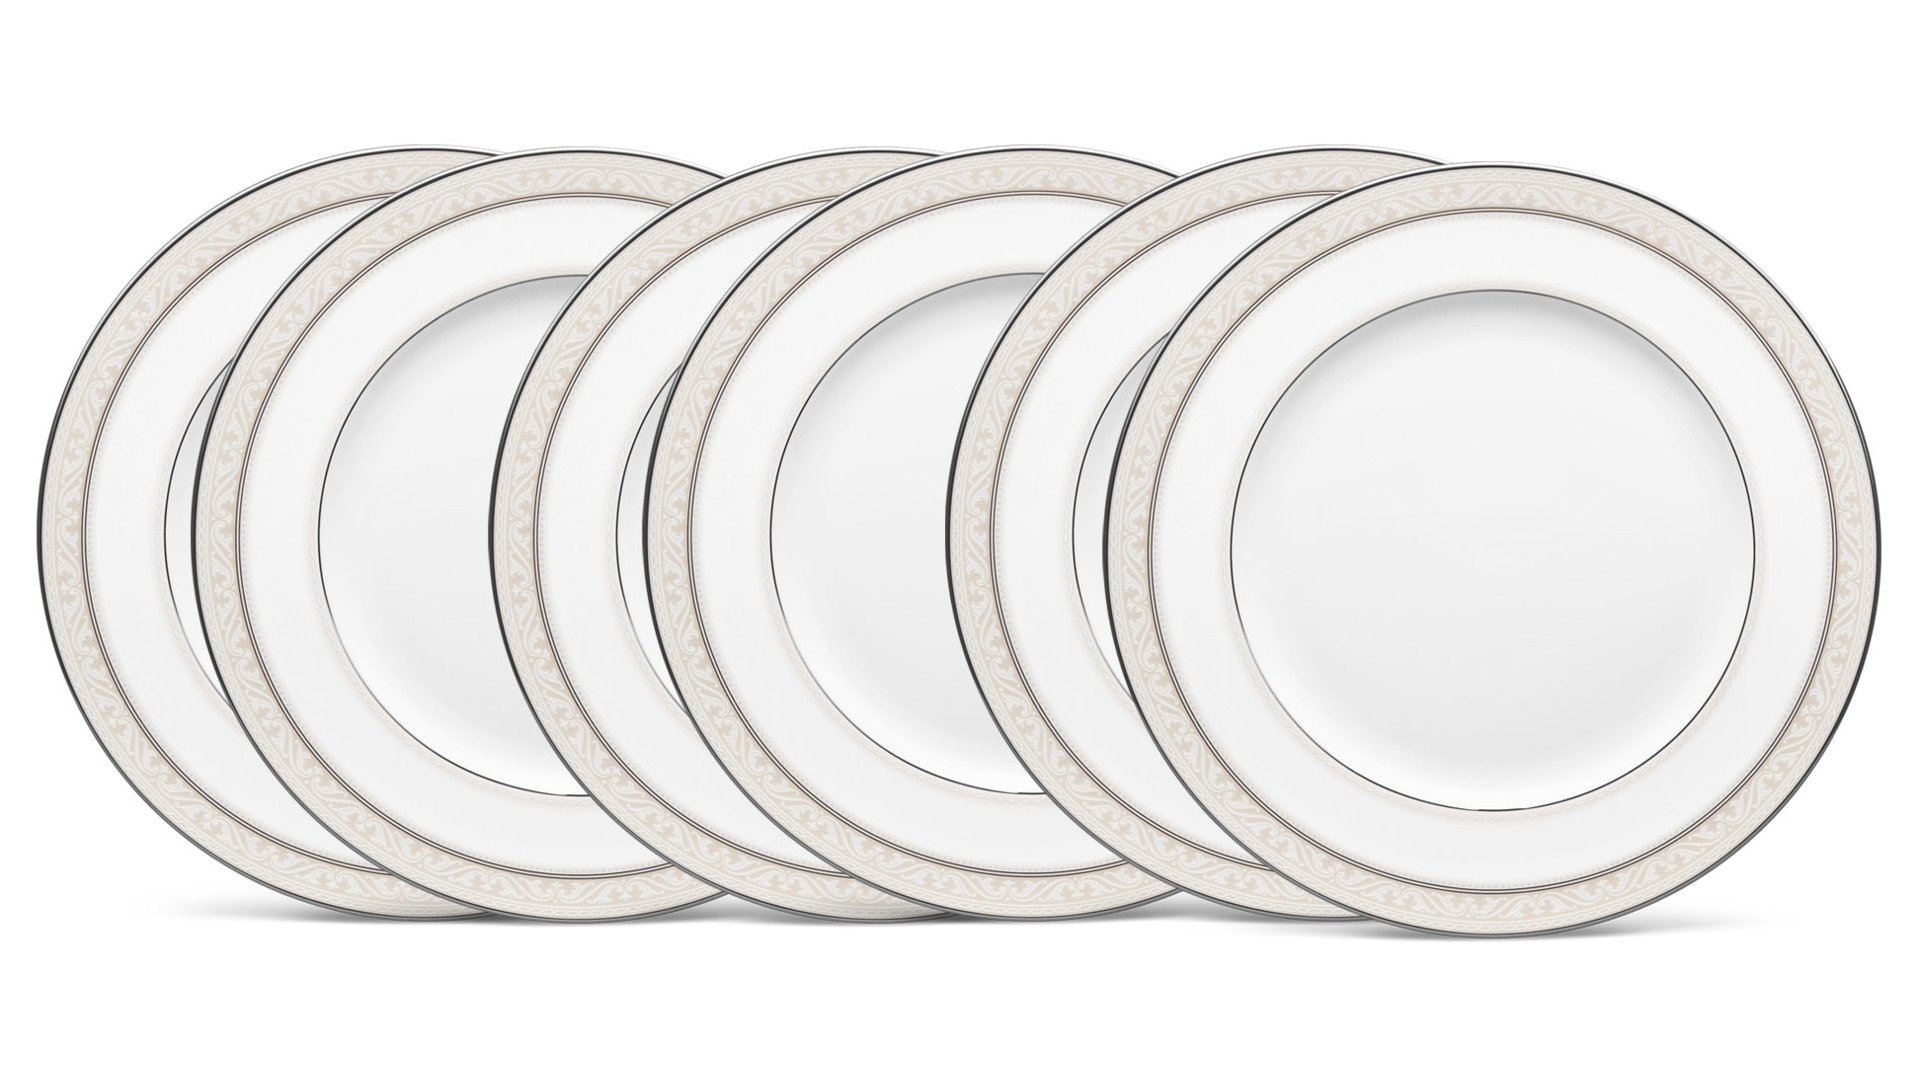 Набор тарелок обеденных Noritake Монтвейл Платиновый кант 27см, 6шт